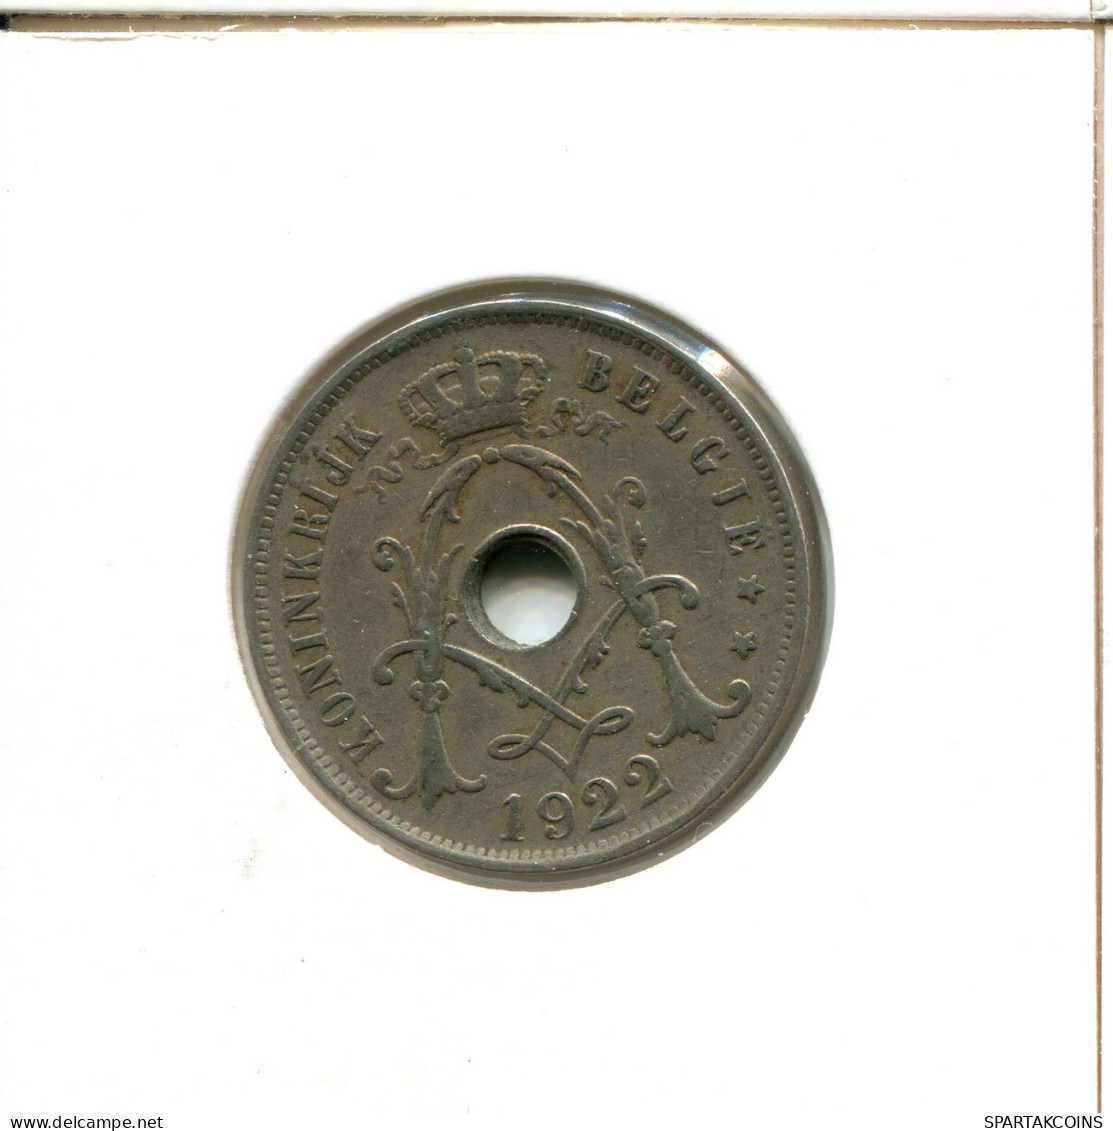 25 CENTIMES 1922 BELGIUM Coin DUTCH Text #AX404.U.A - 25 Centimes